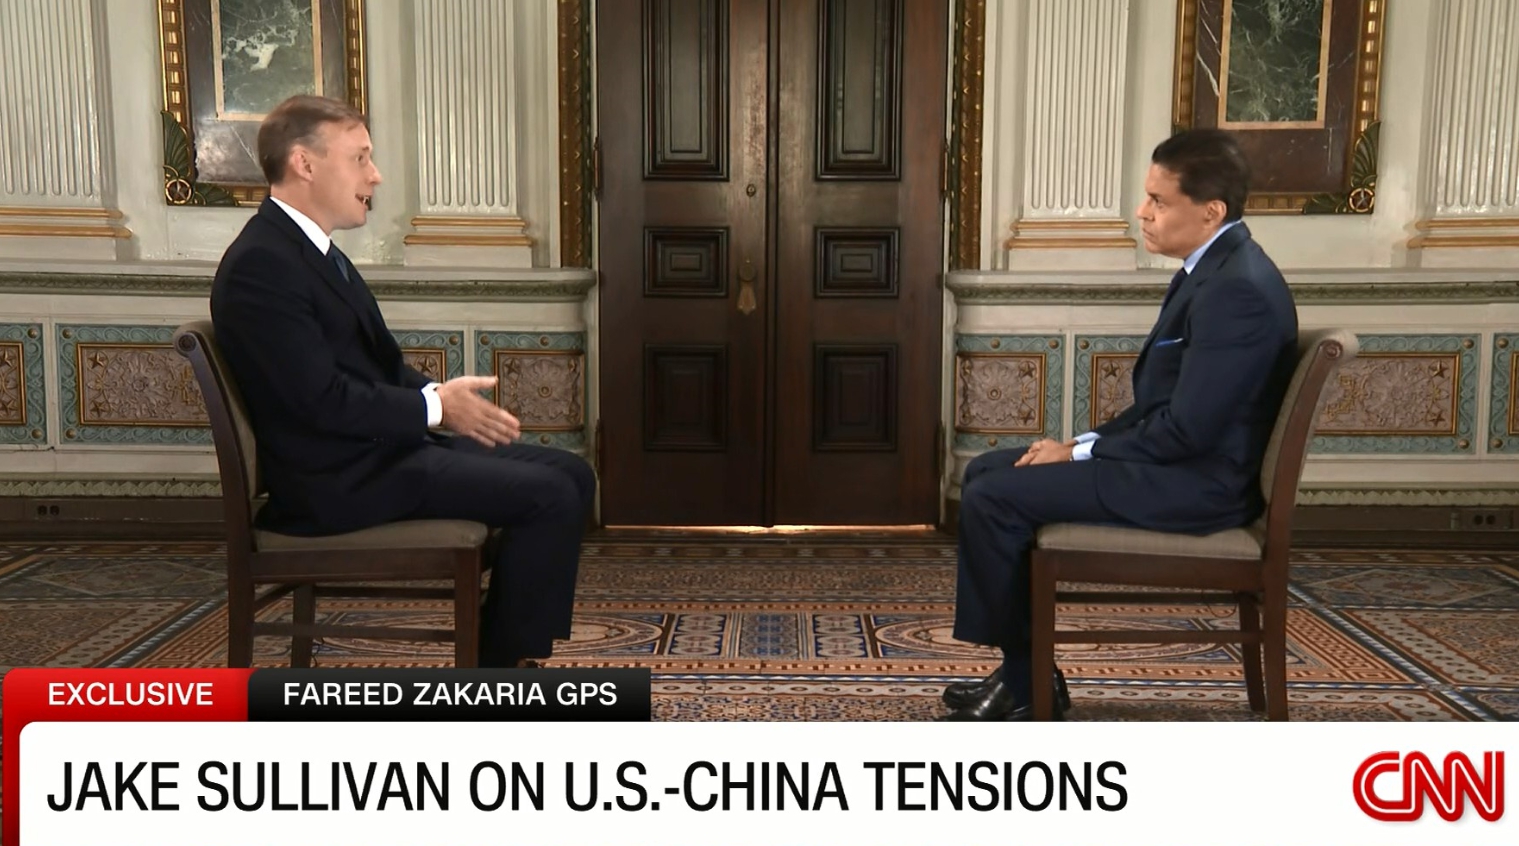 CNN記者兼華盛頓郵報專欄作家Fareed Zakaria專訪白宮國家安全顧問Jake Sullivan